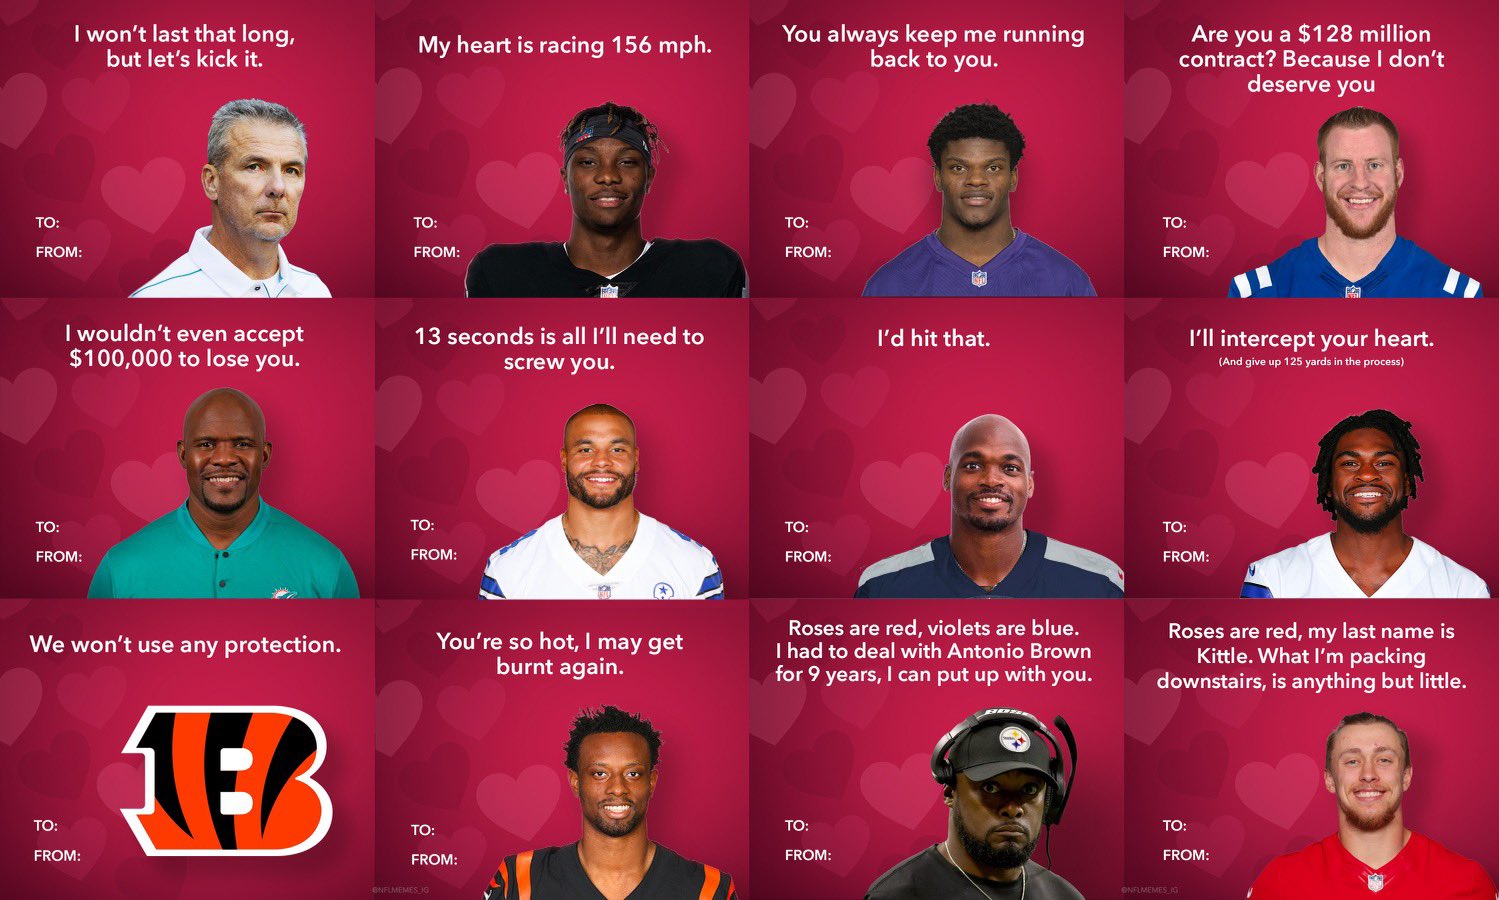 NFL Memes on Twitter "Happy Valentine’s Day! https//t.co/mVfb4YJ0eK